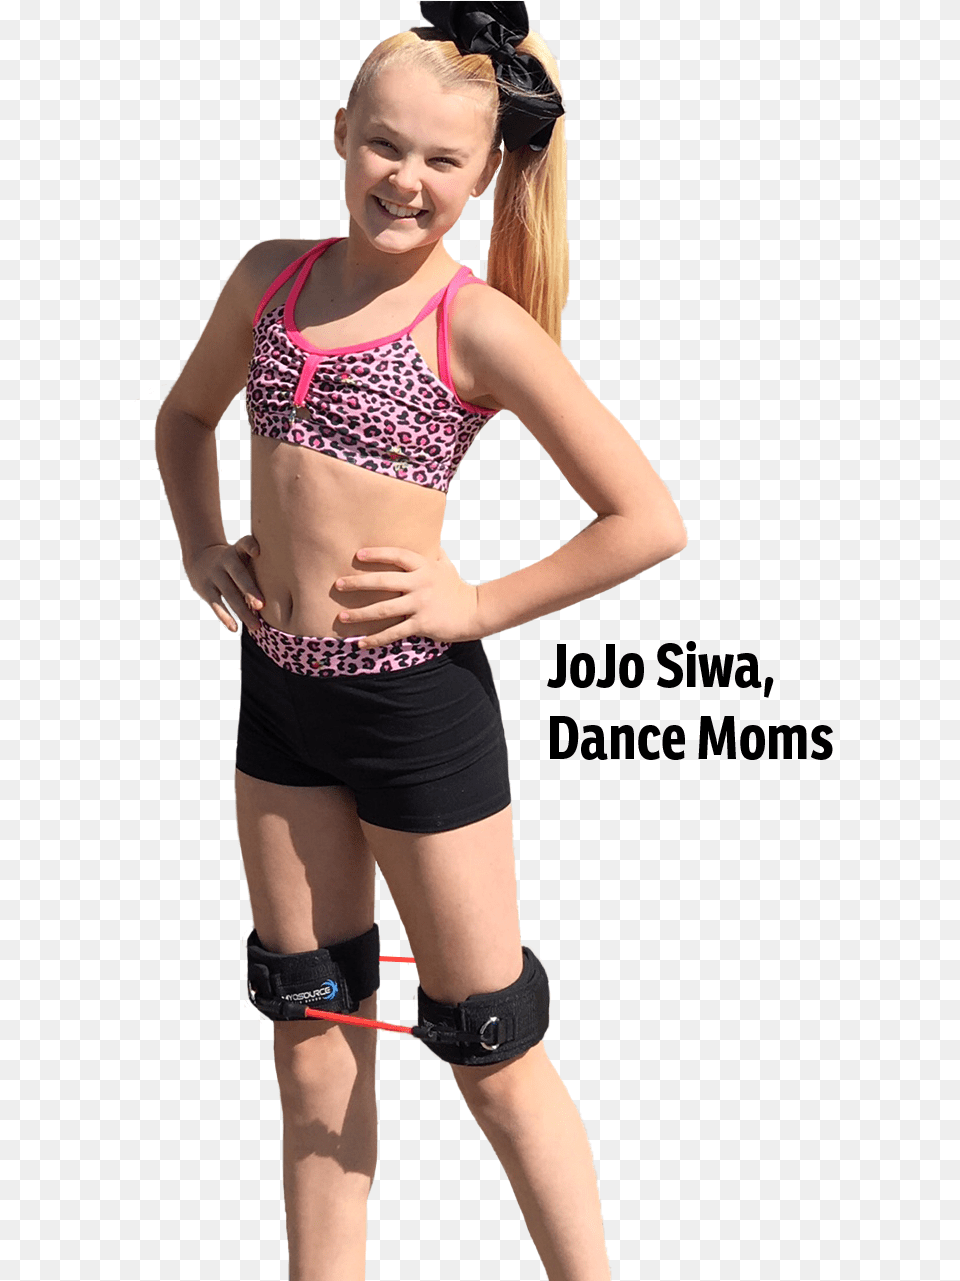 Jojo Siwa Of Dance Moms Fame Wearing Myosource Kinetic Jo Jo Siwa Bra, Shorts, Clothing, Adult, Swimwear Free Png